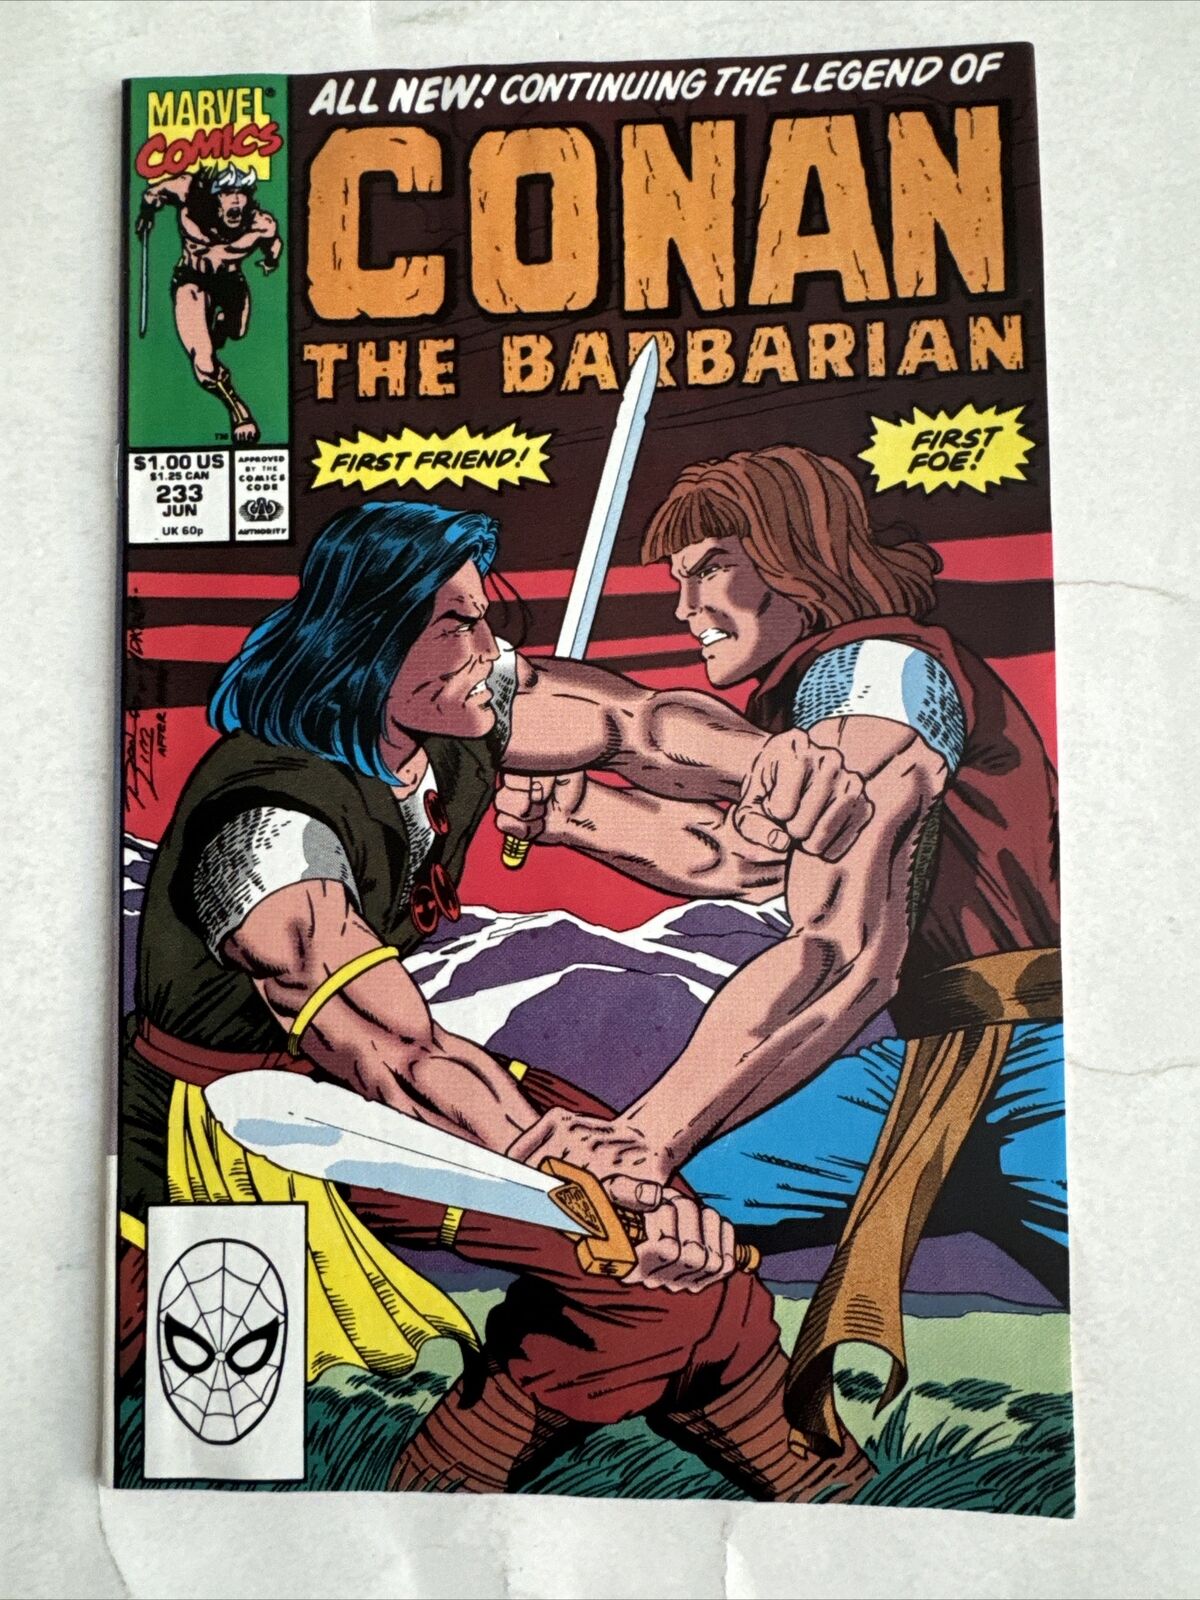 Conan the Barbarian Vol. 1 #233 Marvel Comics - Bagged & Boarded